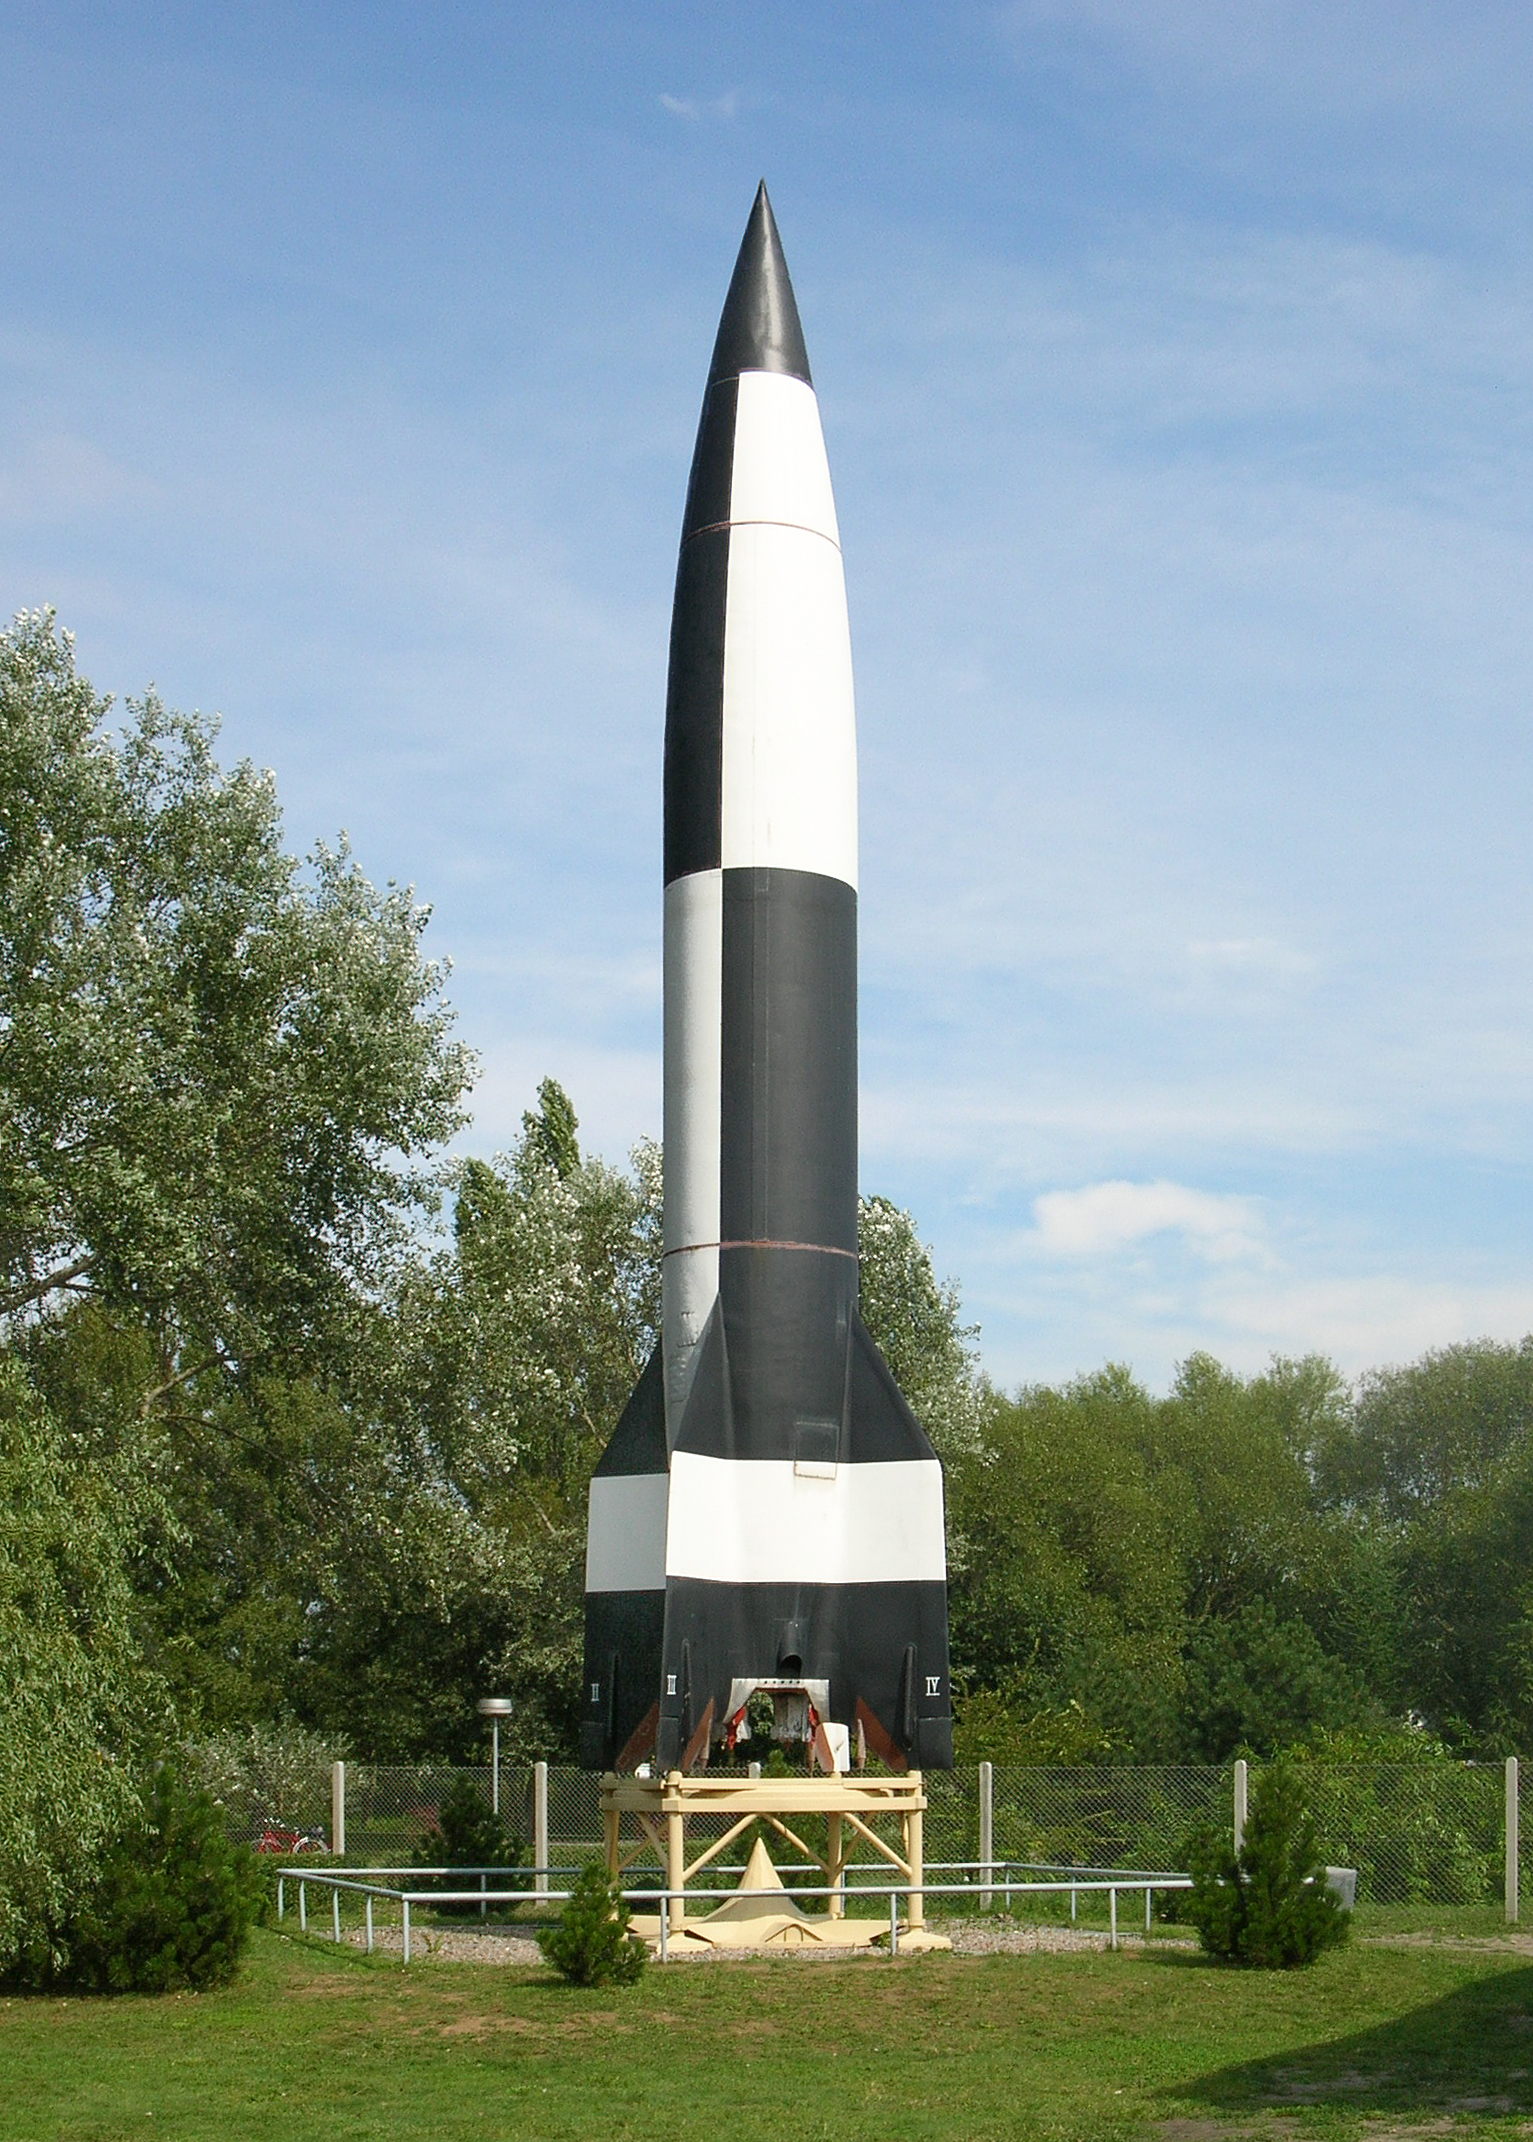 V-2 rocket - Wikipedia